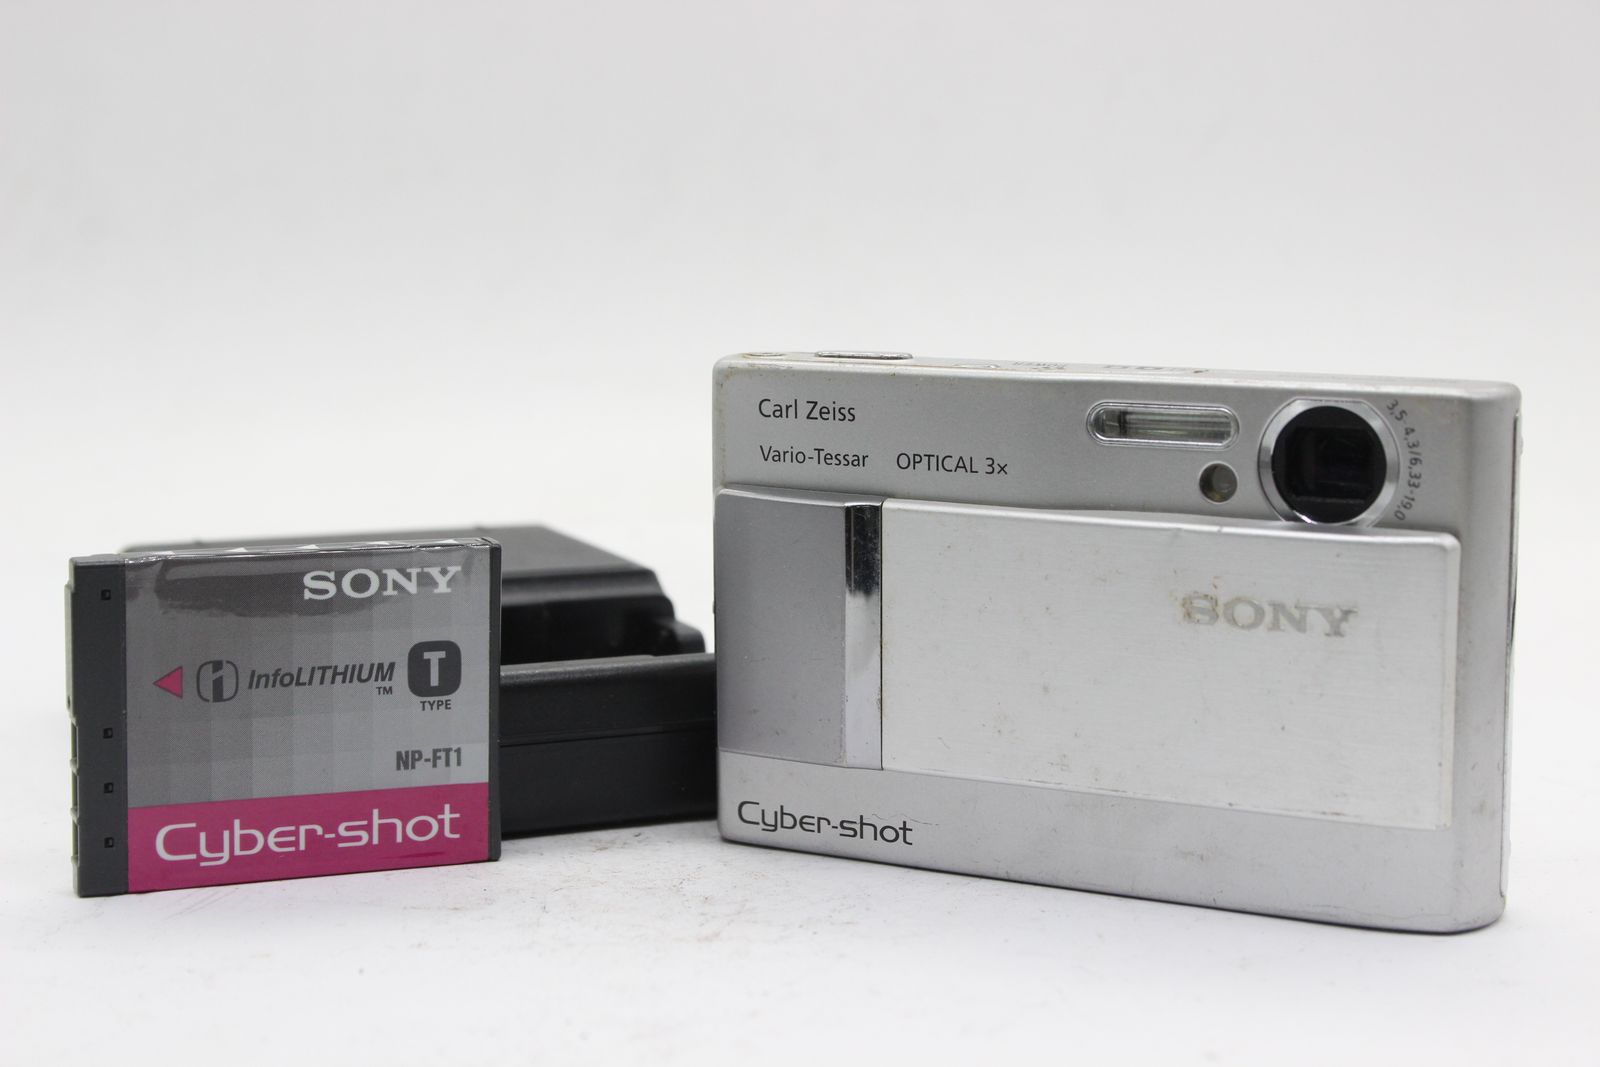 SONY 【返品保証】 ソニー SONY Cyber-shot DSC-T10 3x バッテリー チャージャー付き コンパクトデジタルカメラ s5135